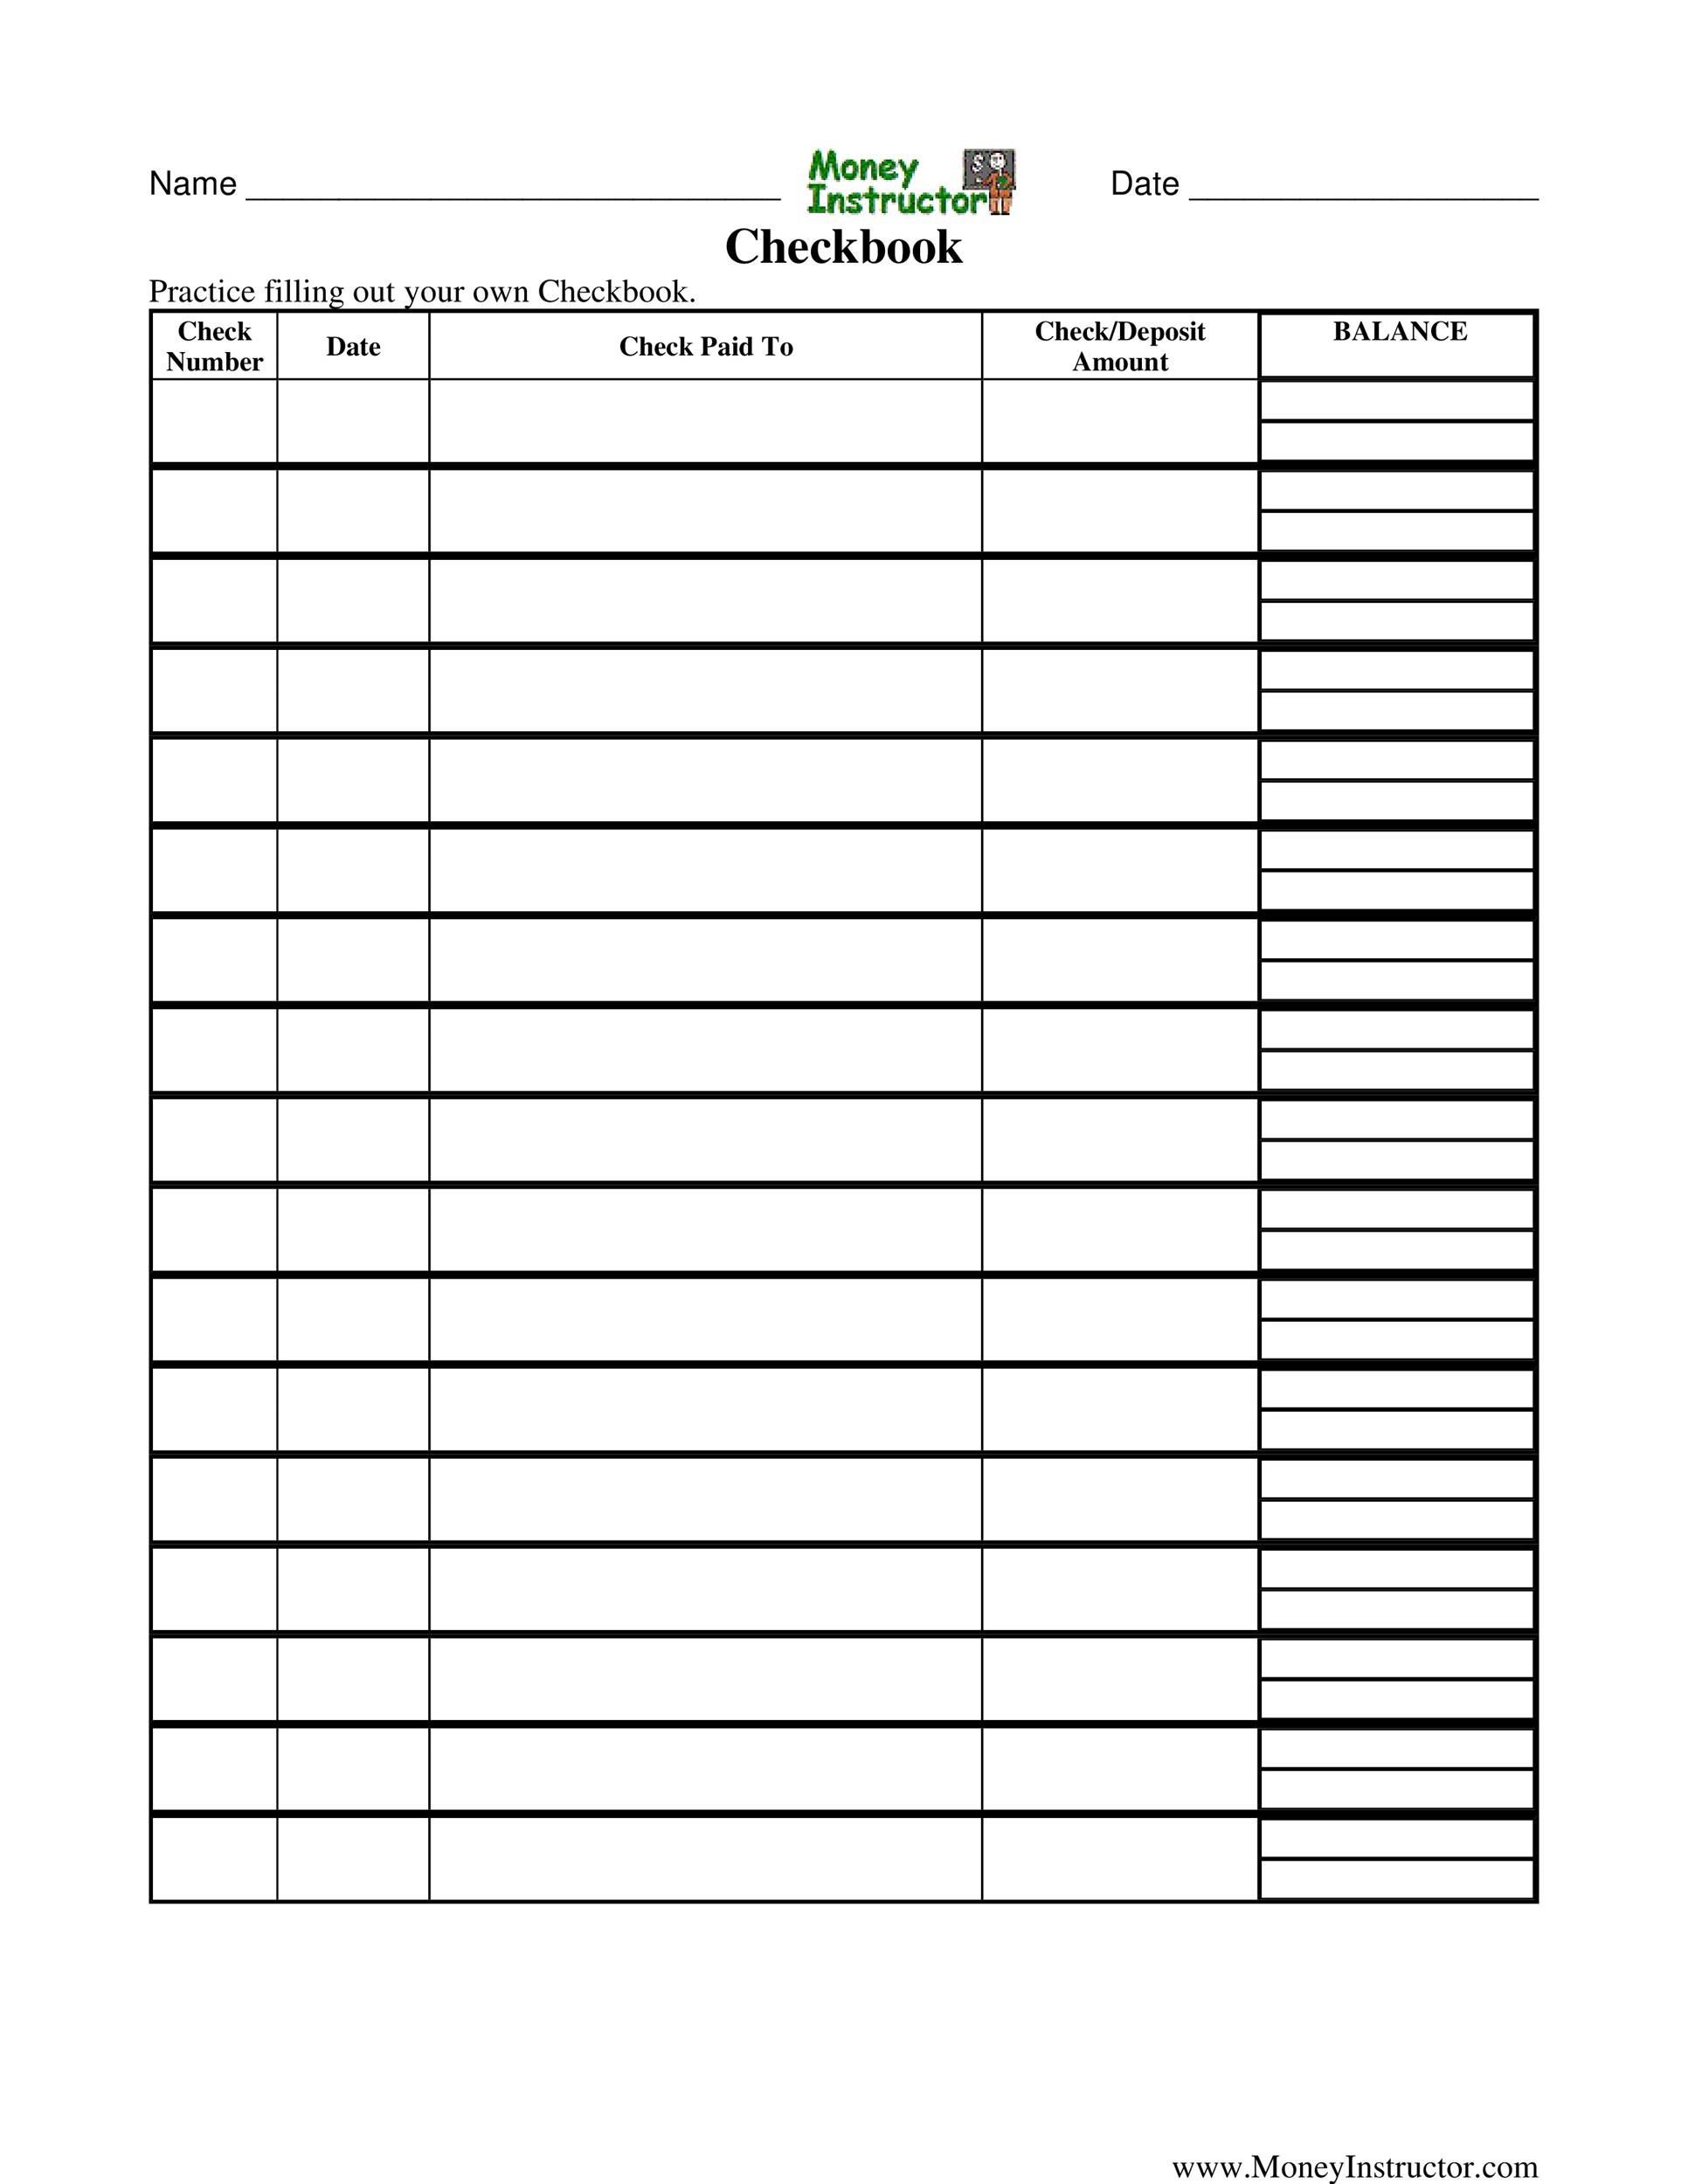 39 Checkbook Register Templates [100 Free, Printable] ᐅ TemplateLab